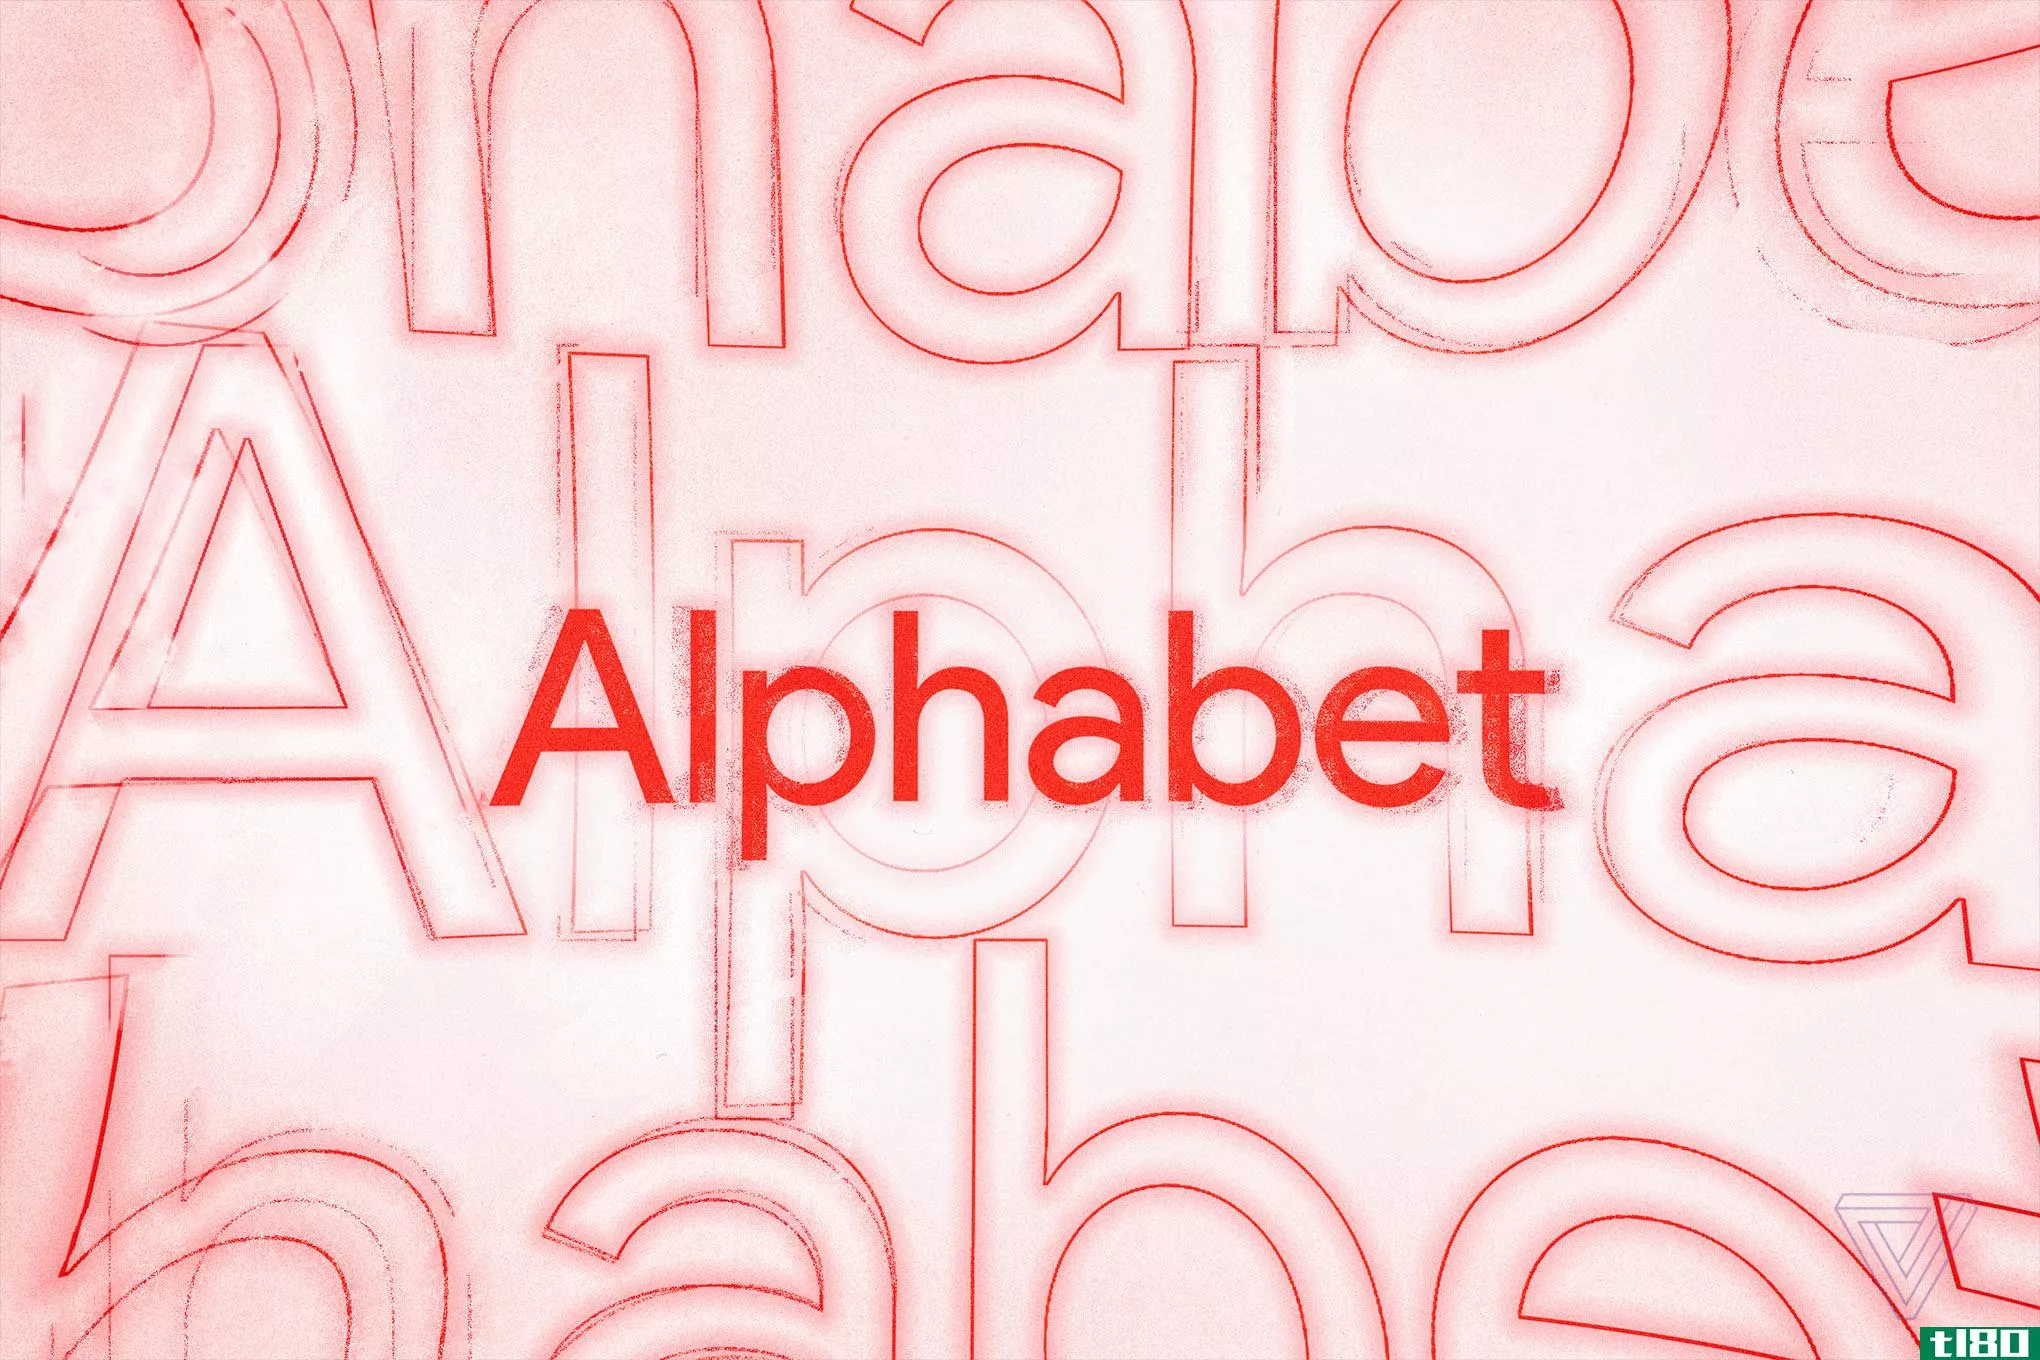 alphabet的jigsaw推出了一个工具，帮助记者识别假货和被操纵的图像